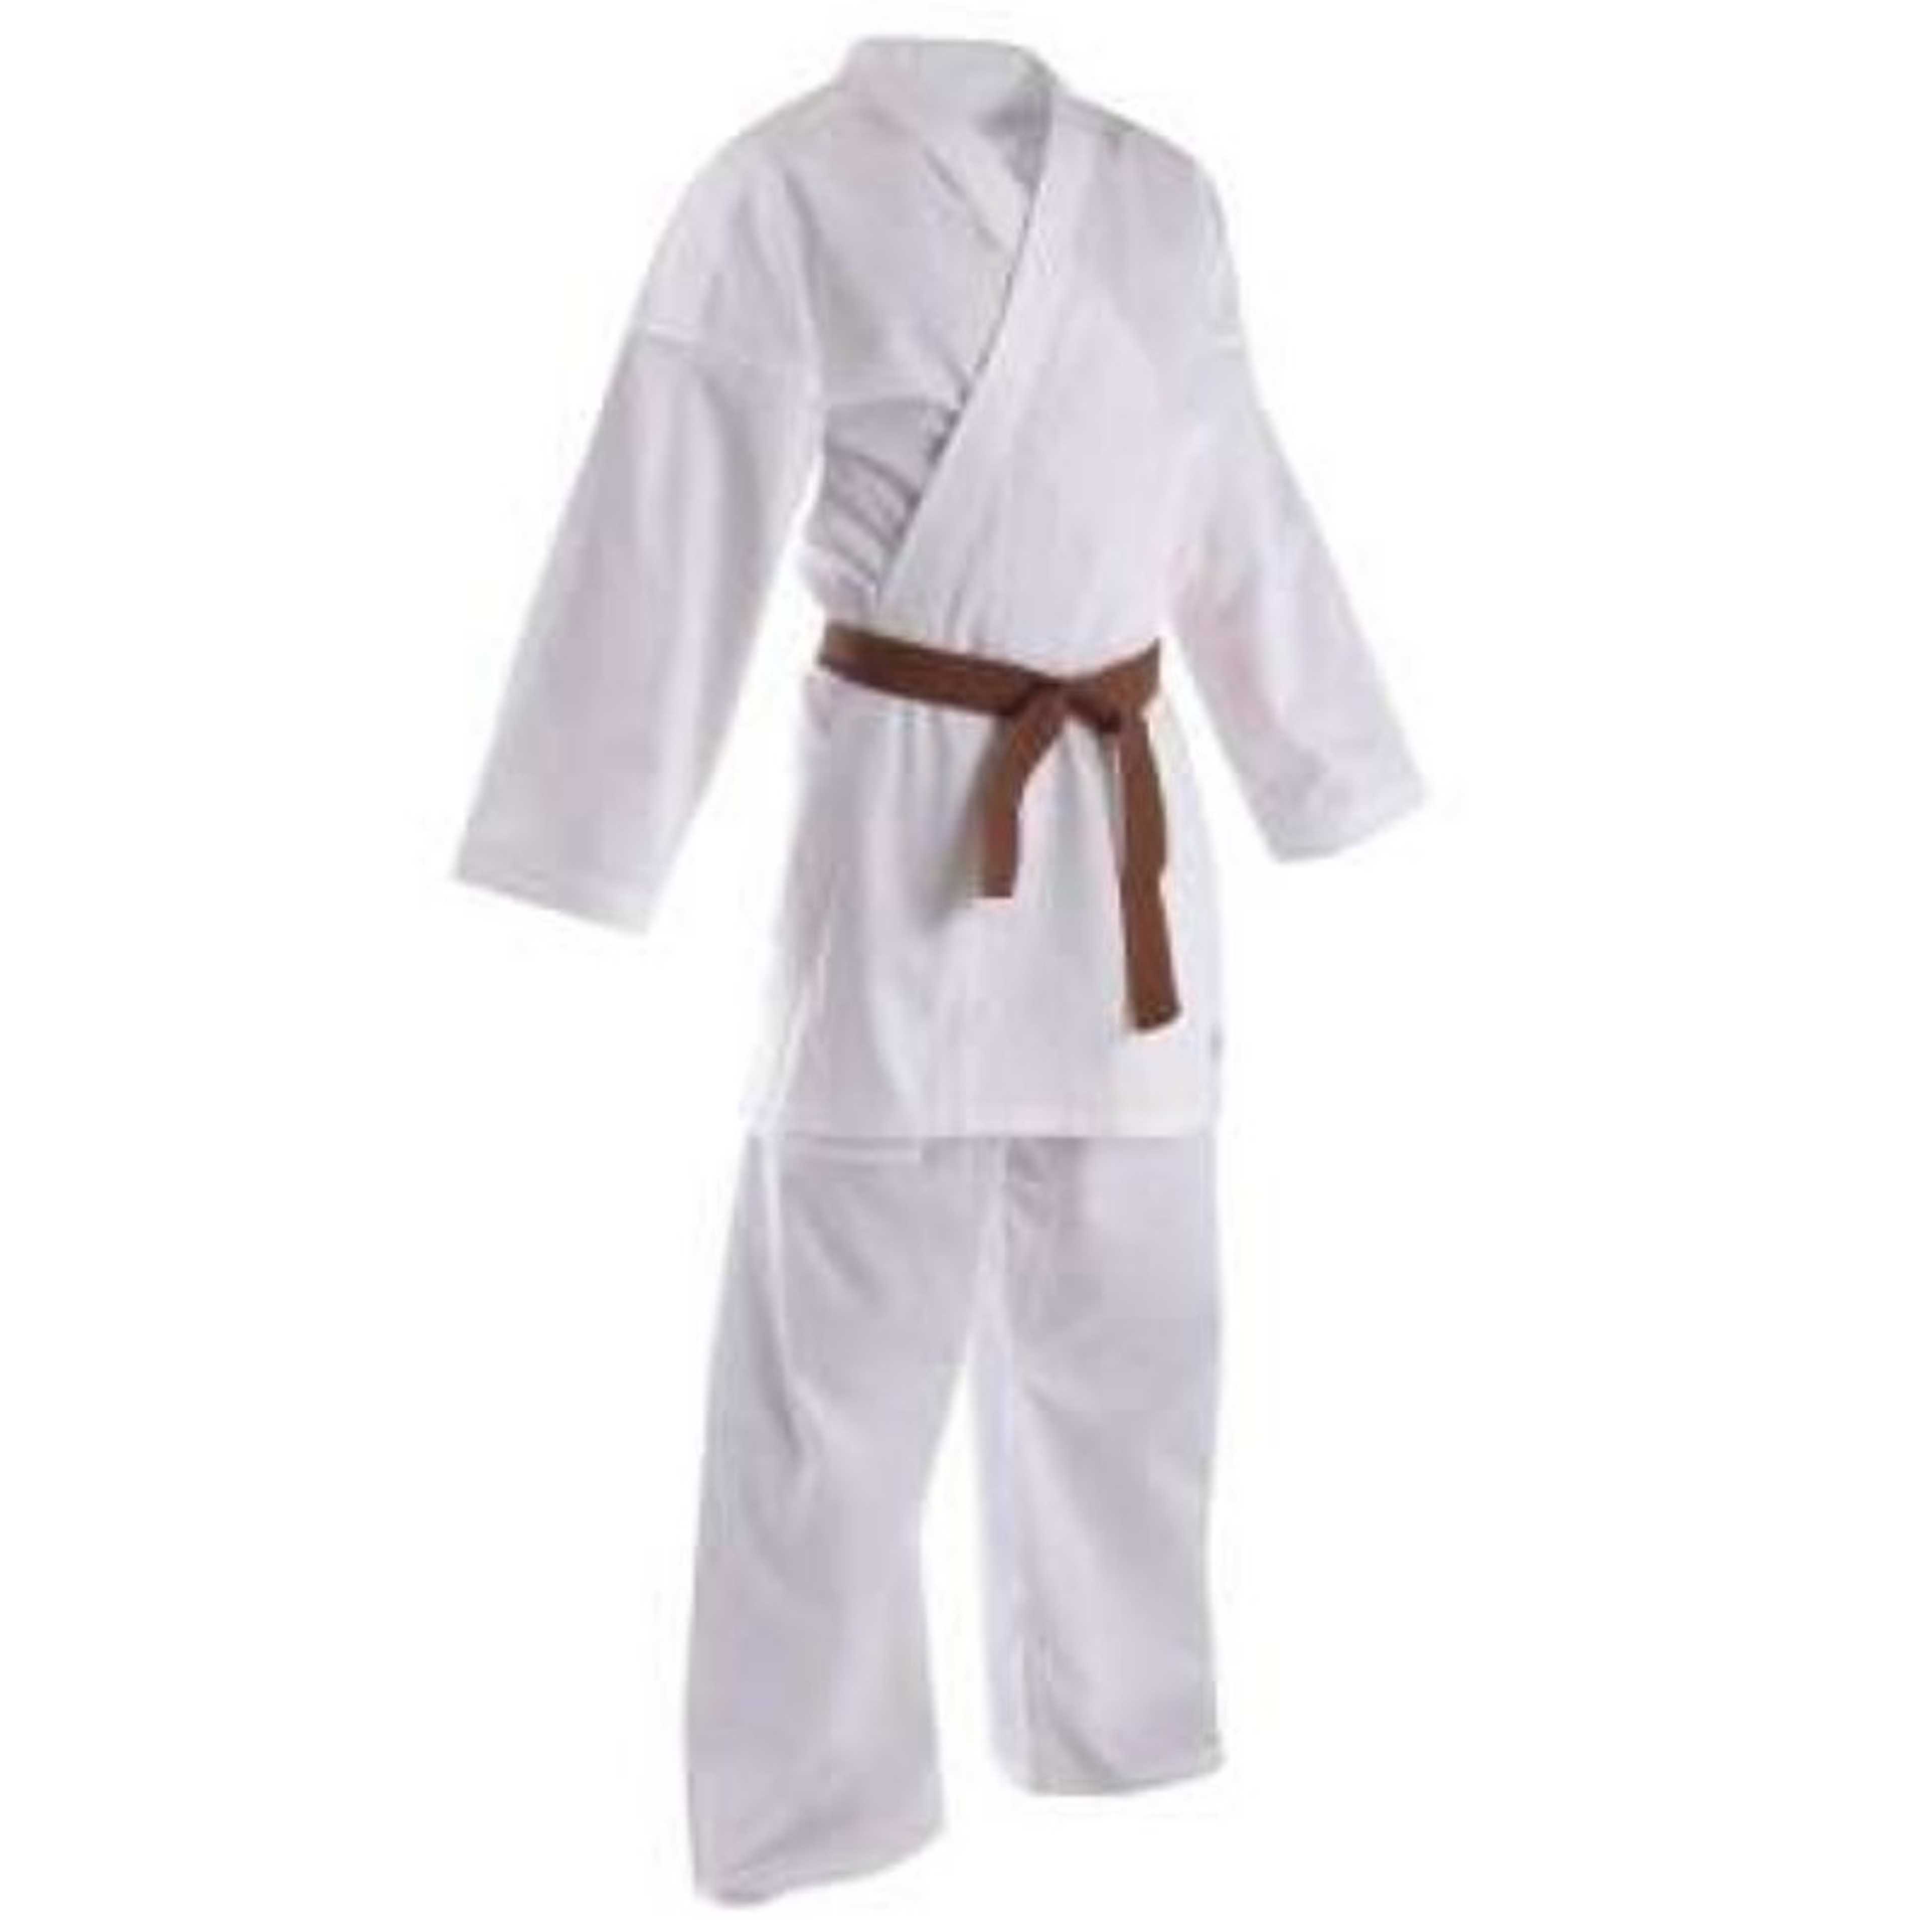 Taekwondo Dress Kits No 7 with Brown Belt